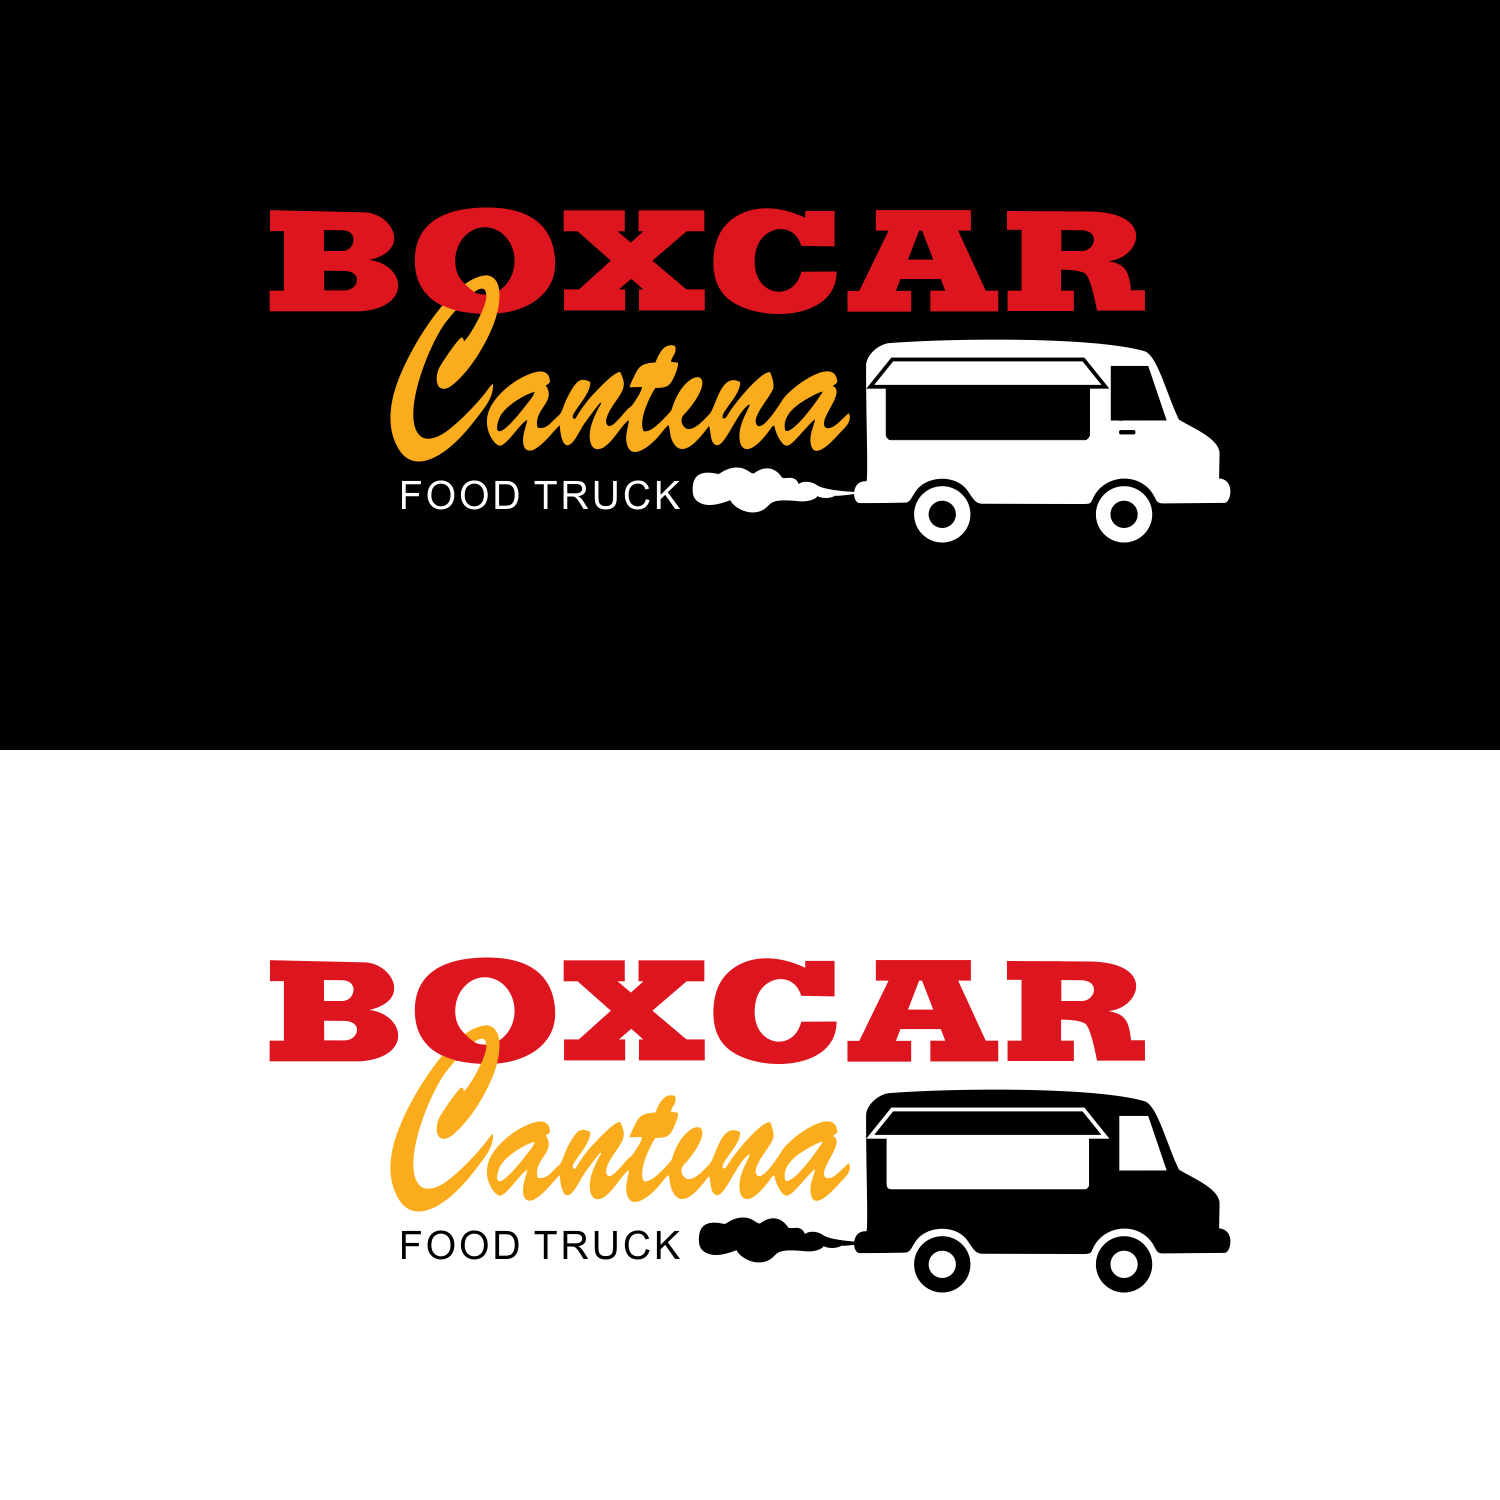 Food Truck Company Logo - Elegant, Playful Logo Design for Boxcar Cantina Food Truck